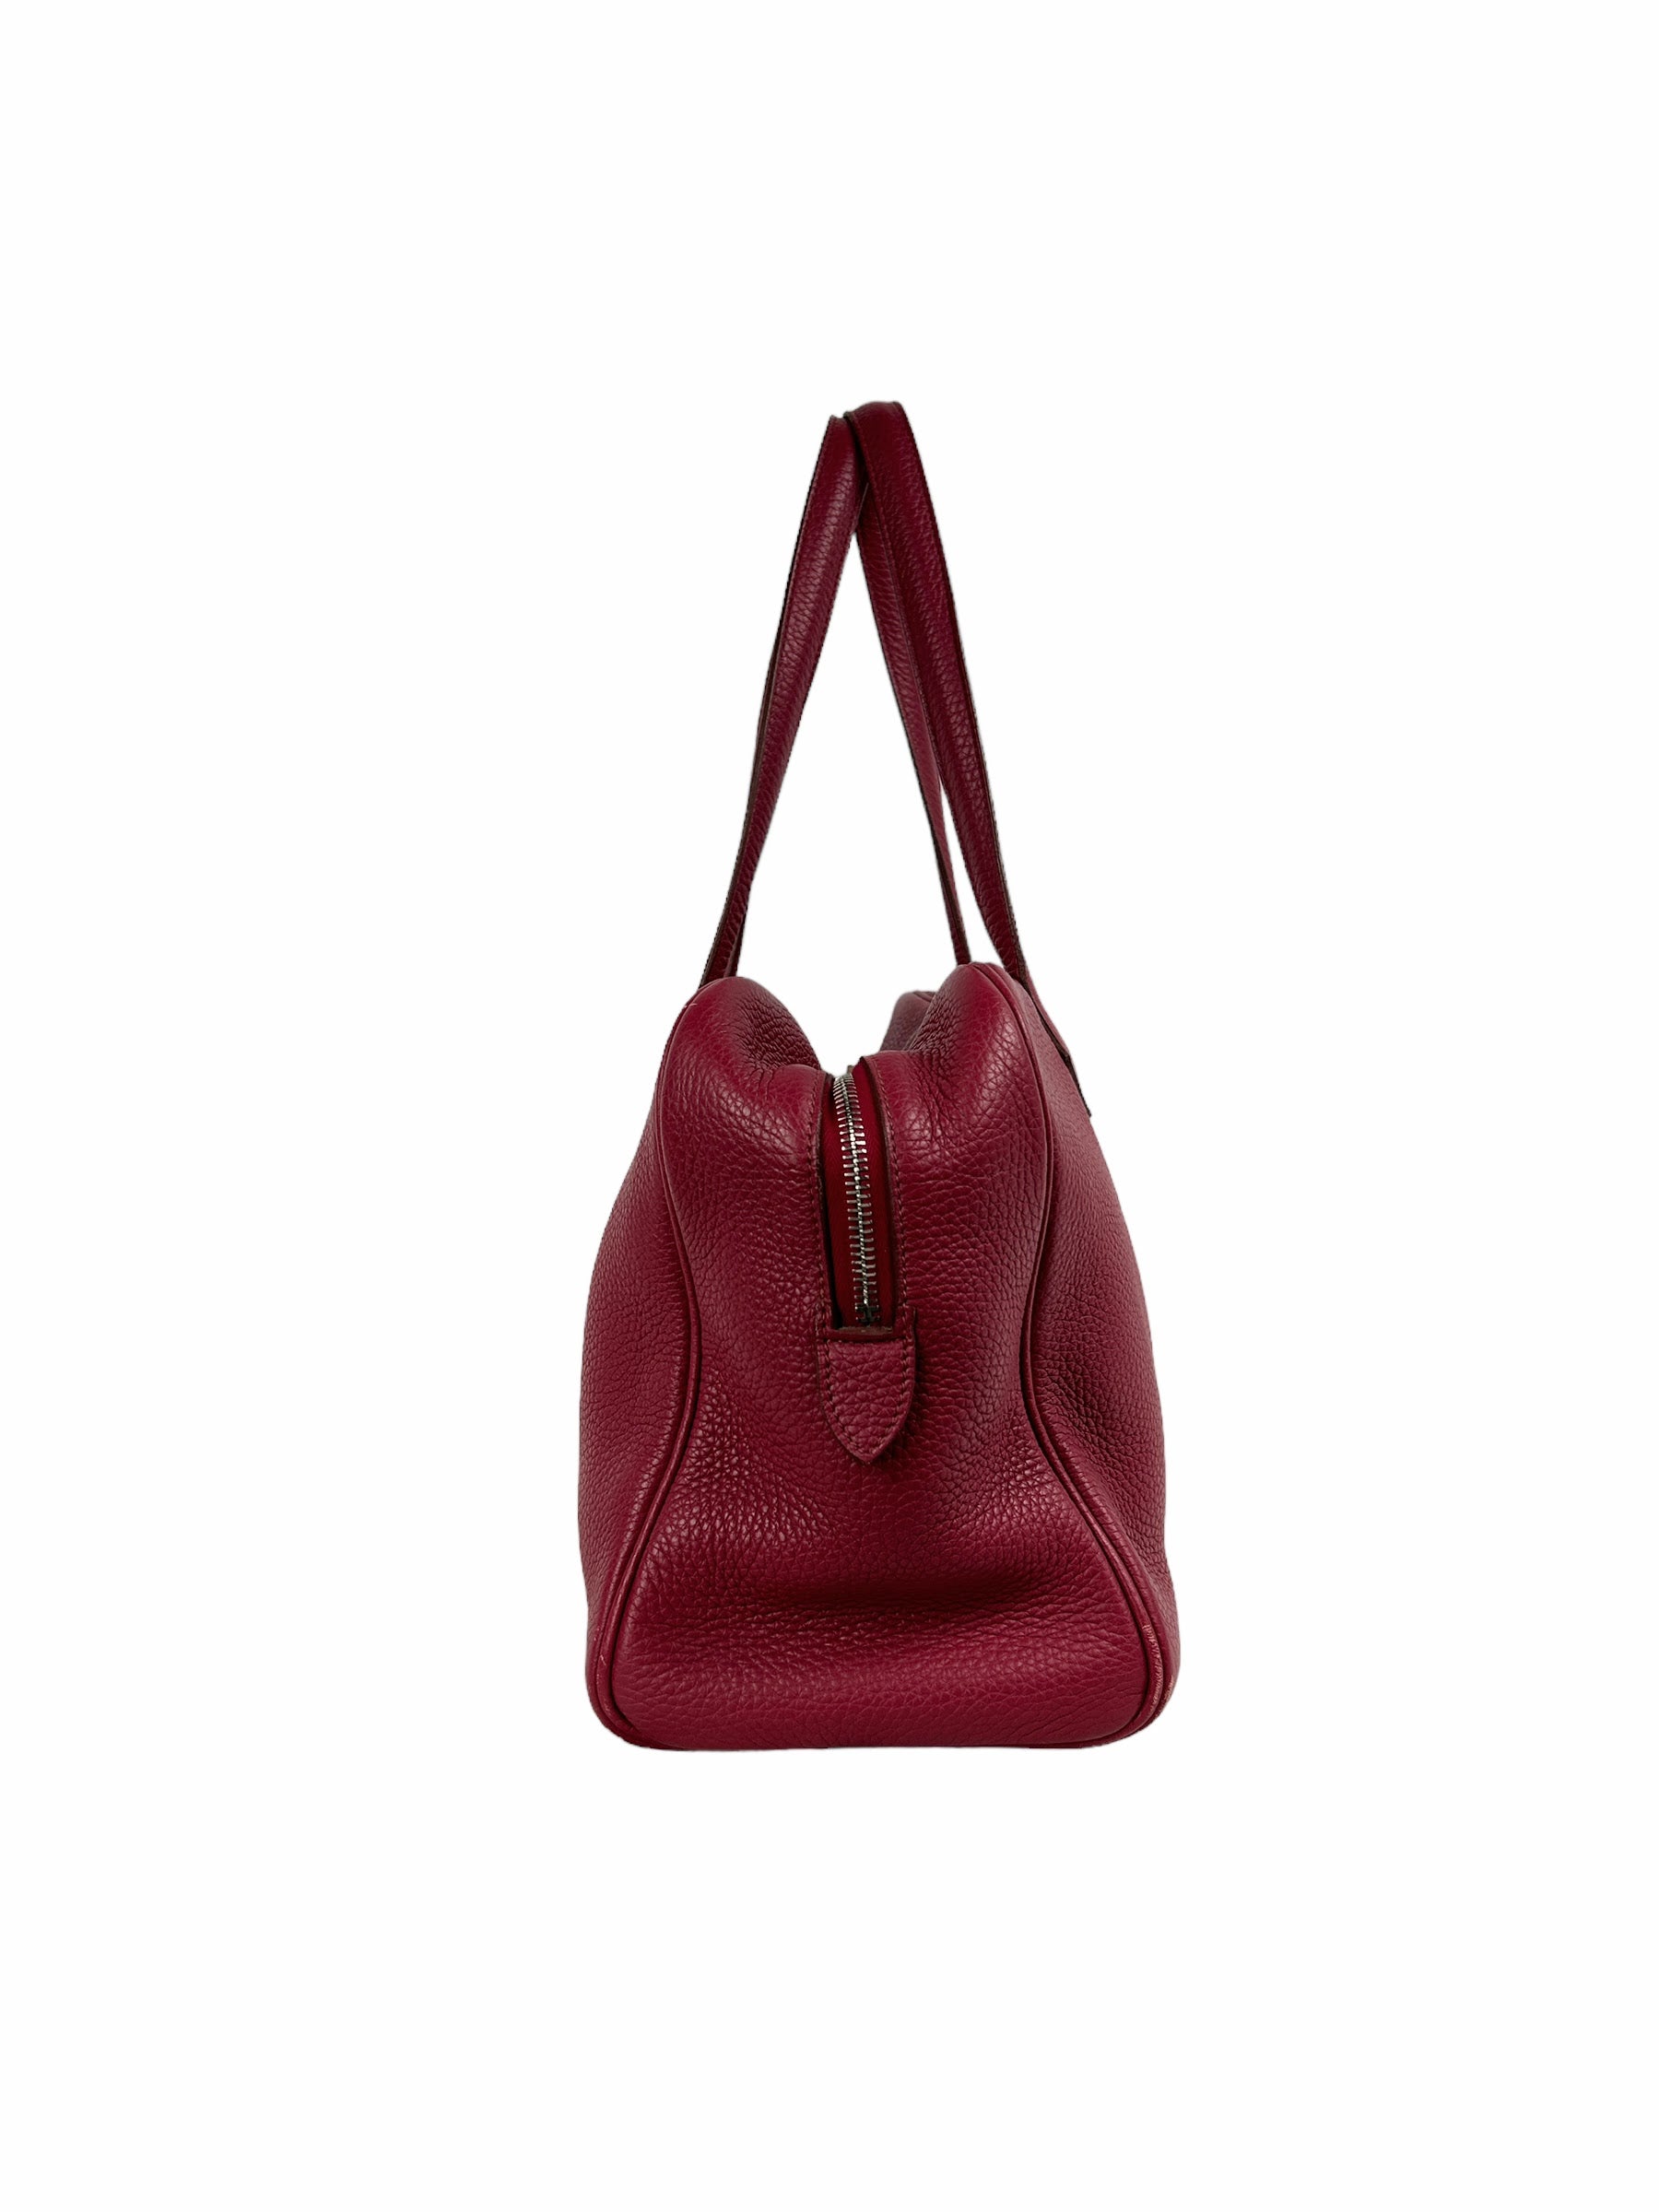 Clemence Bose De Rose Victoria 35  Shoulder Bag w/PHW